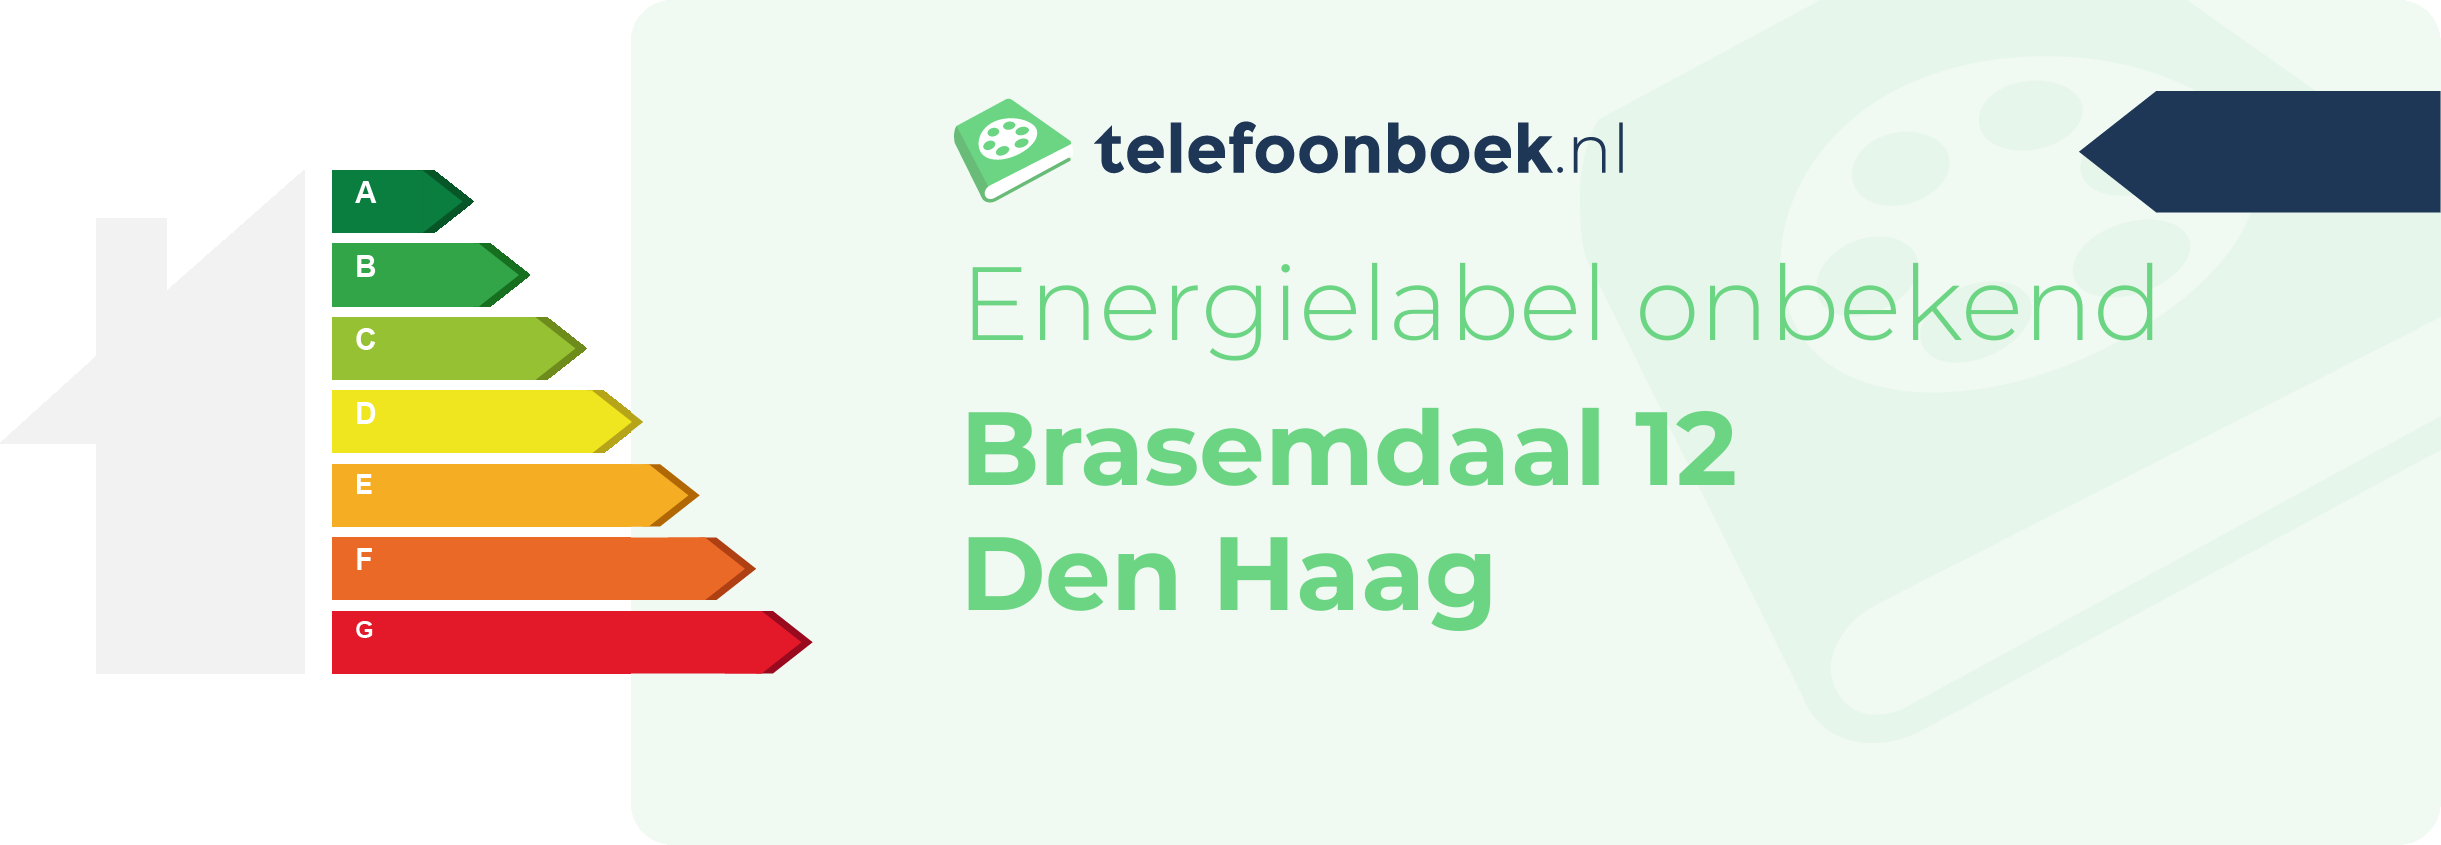 Energielabel Brasemdaal 12 Den Haag